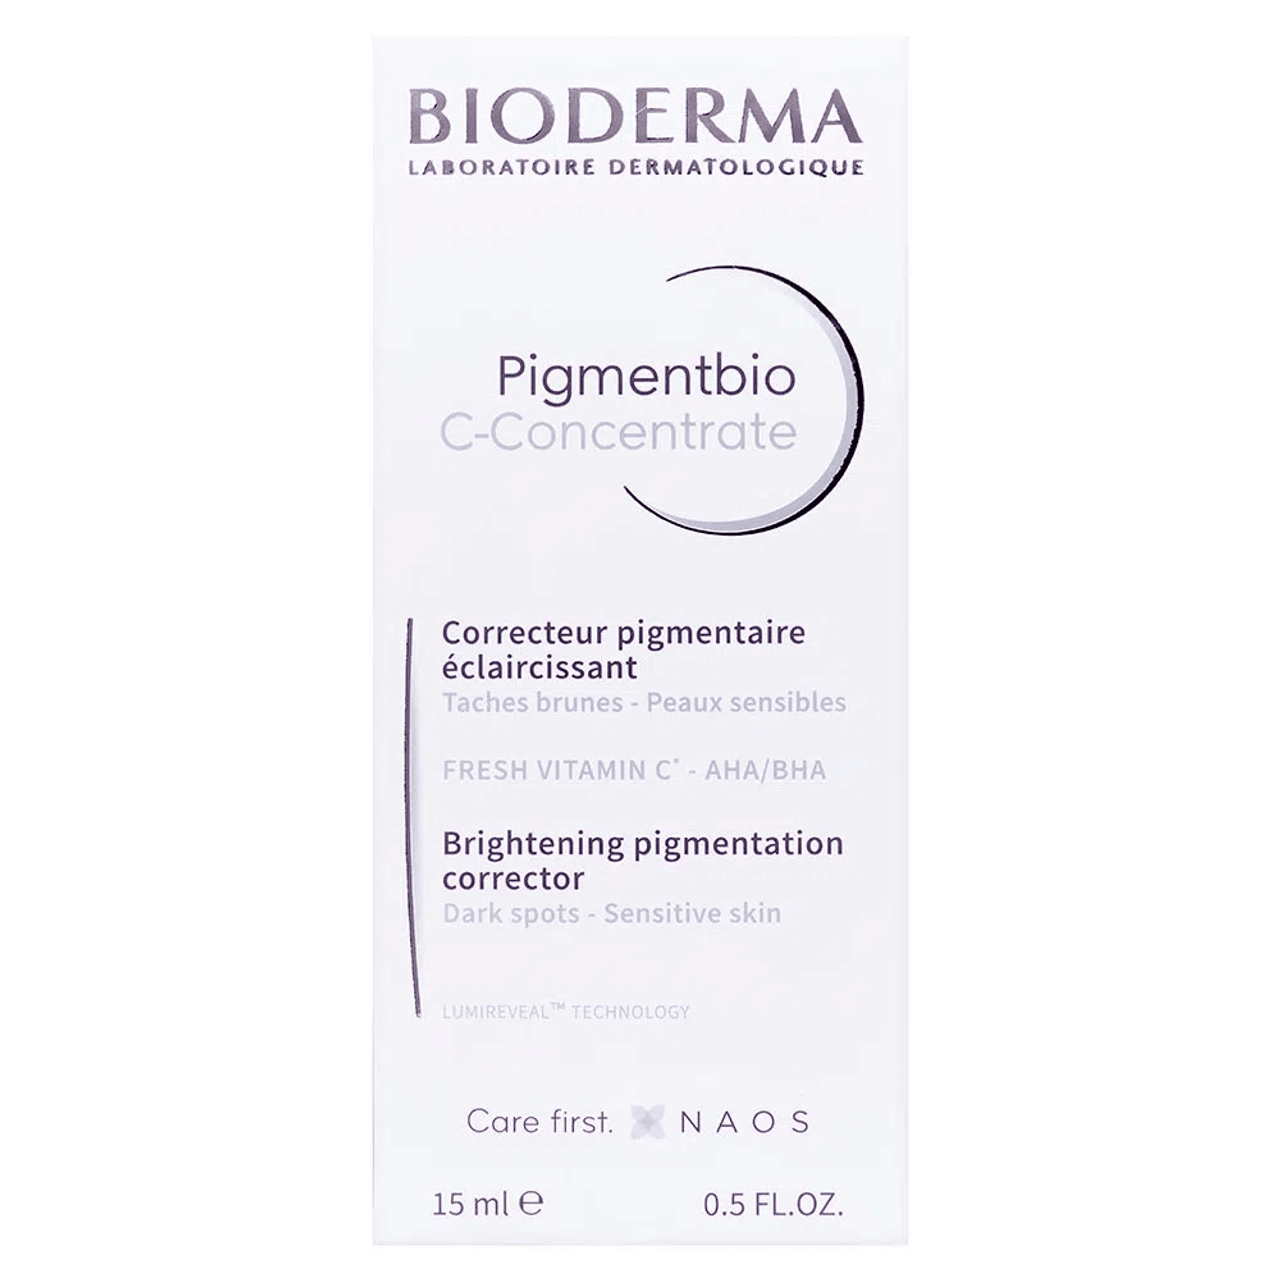 Bioderma Pigmentbio 2.5fl oz • See the best prices »